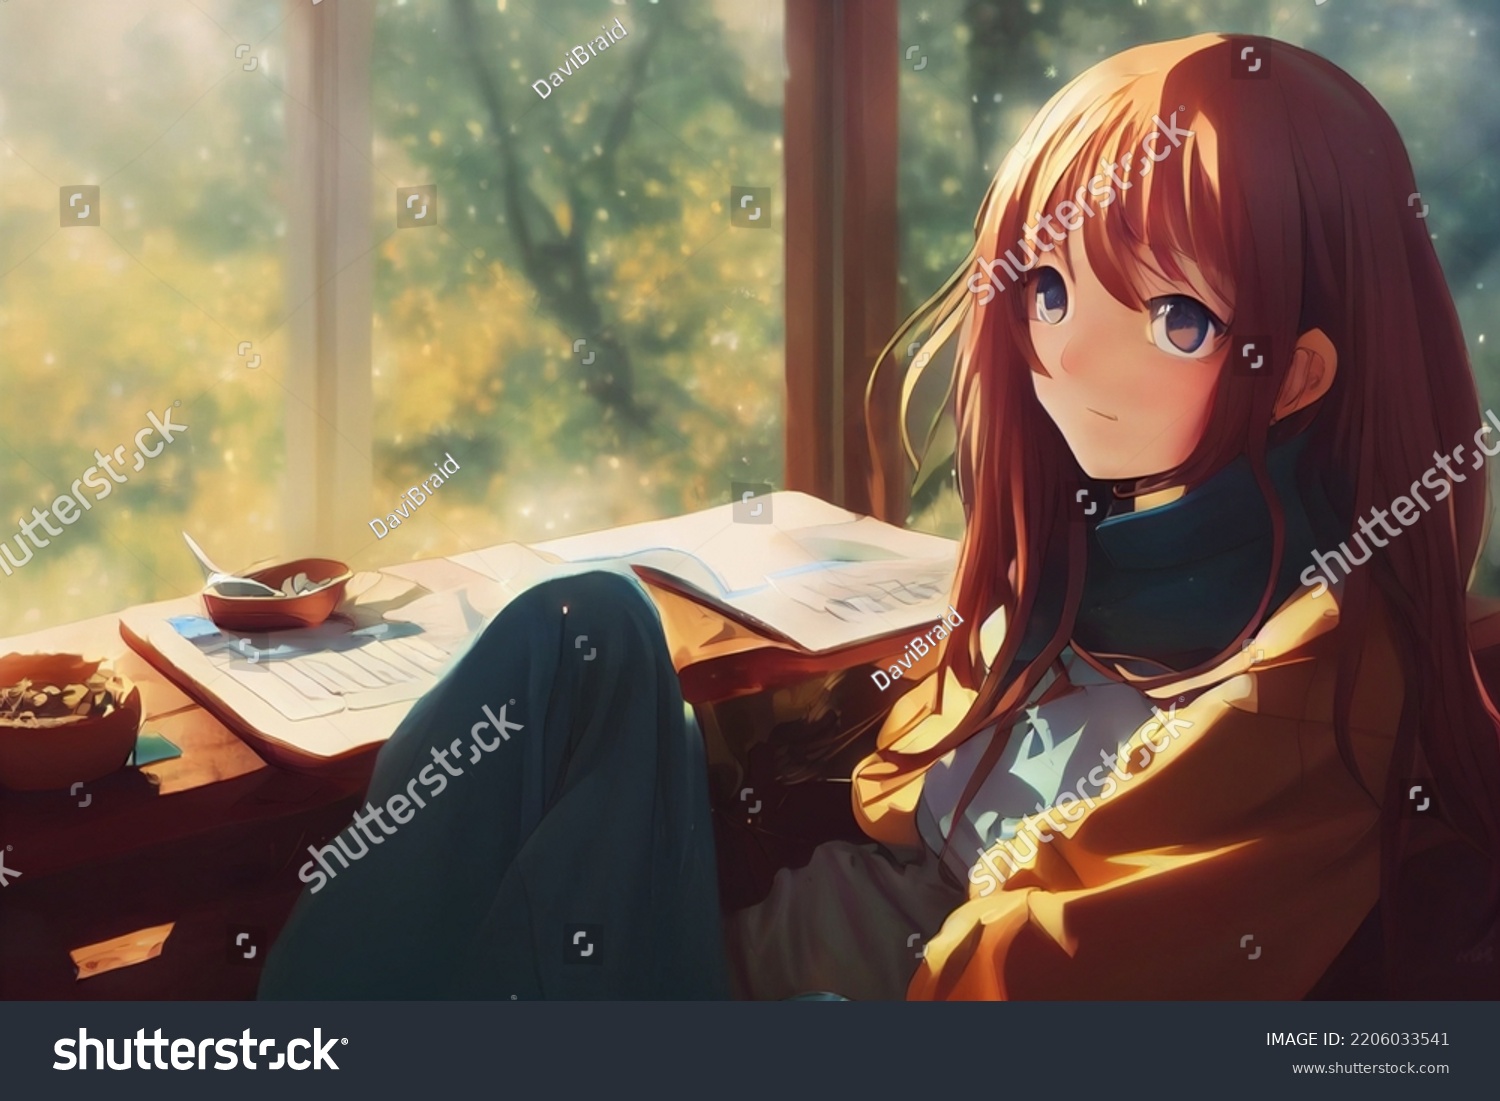 Anime study images stock photos vectors